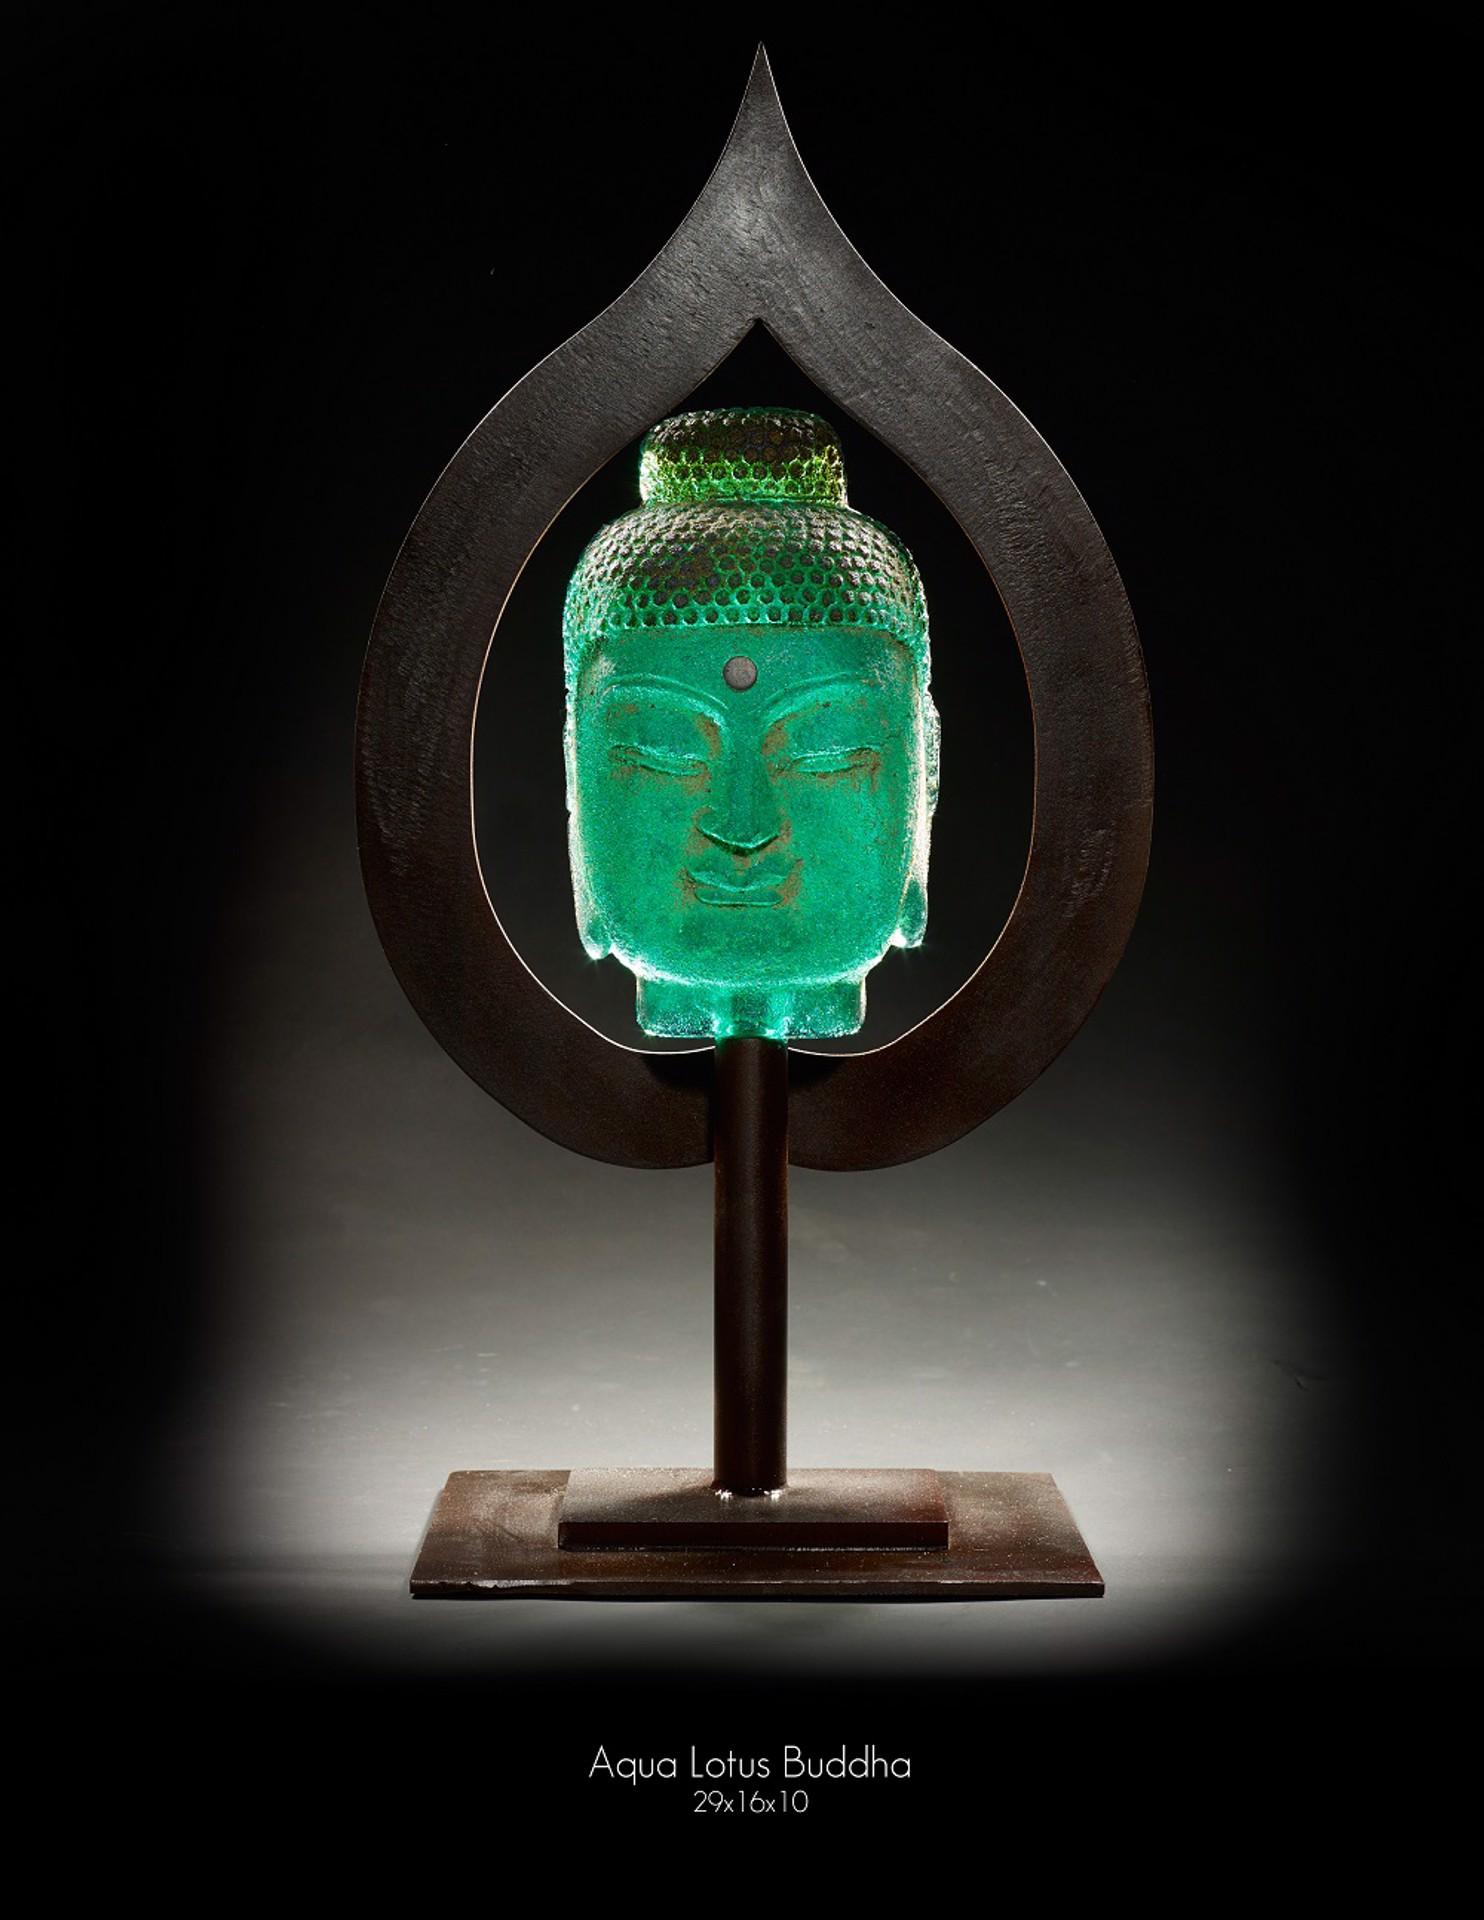 Aqua Lotus Buddha - Art by Marlene Rose (b. 1967)